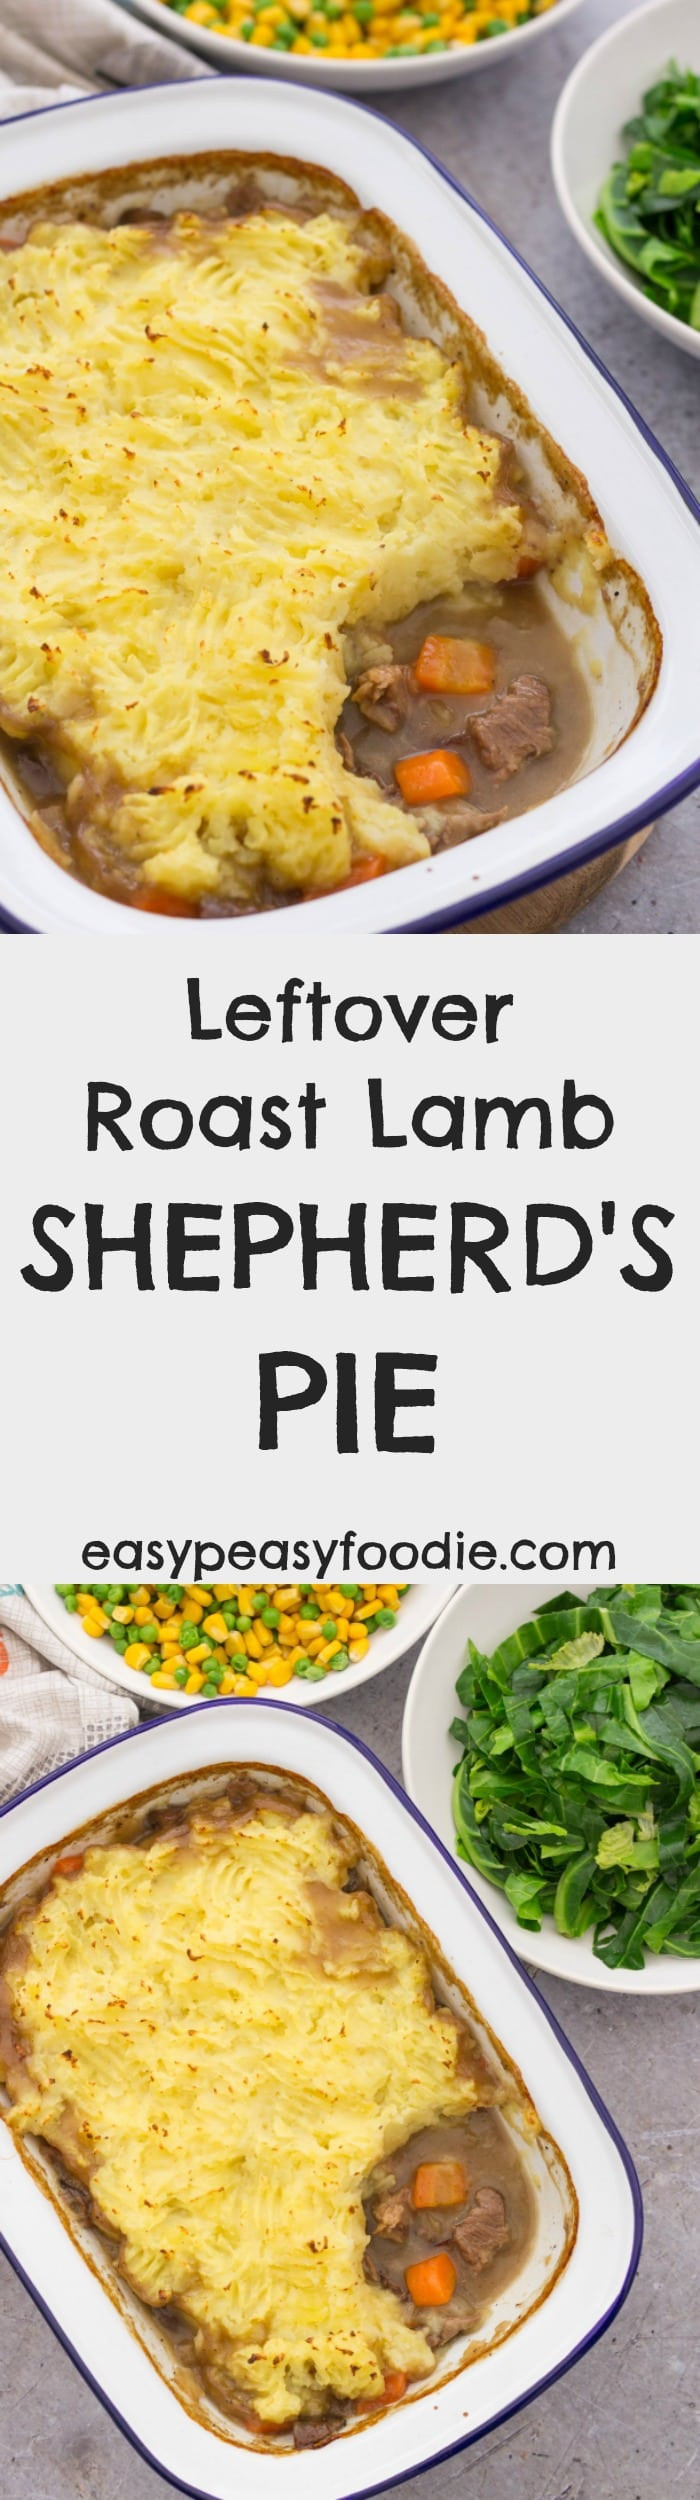 Shepherd'S Pie With Lamb
 Leftover Roast Lamb Shepherd’s Pie Easy Peasy Foo